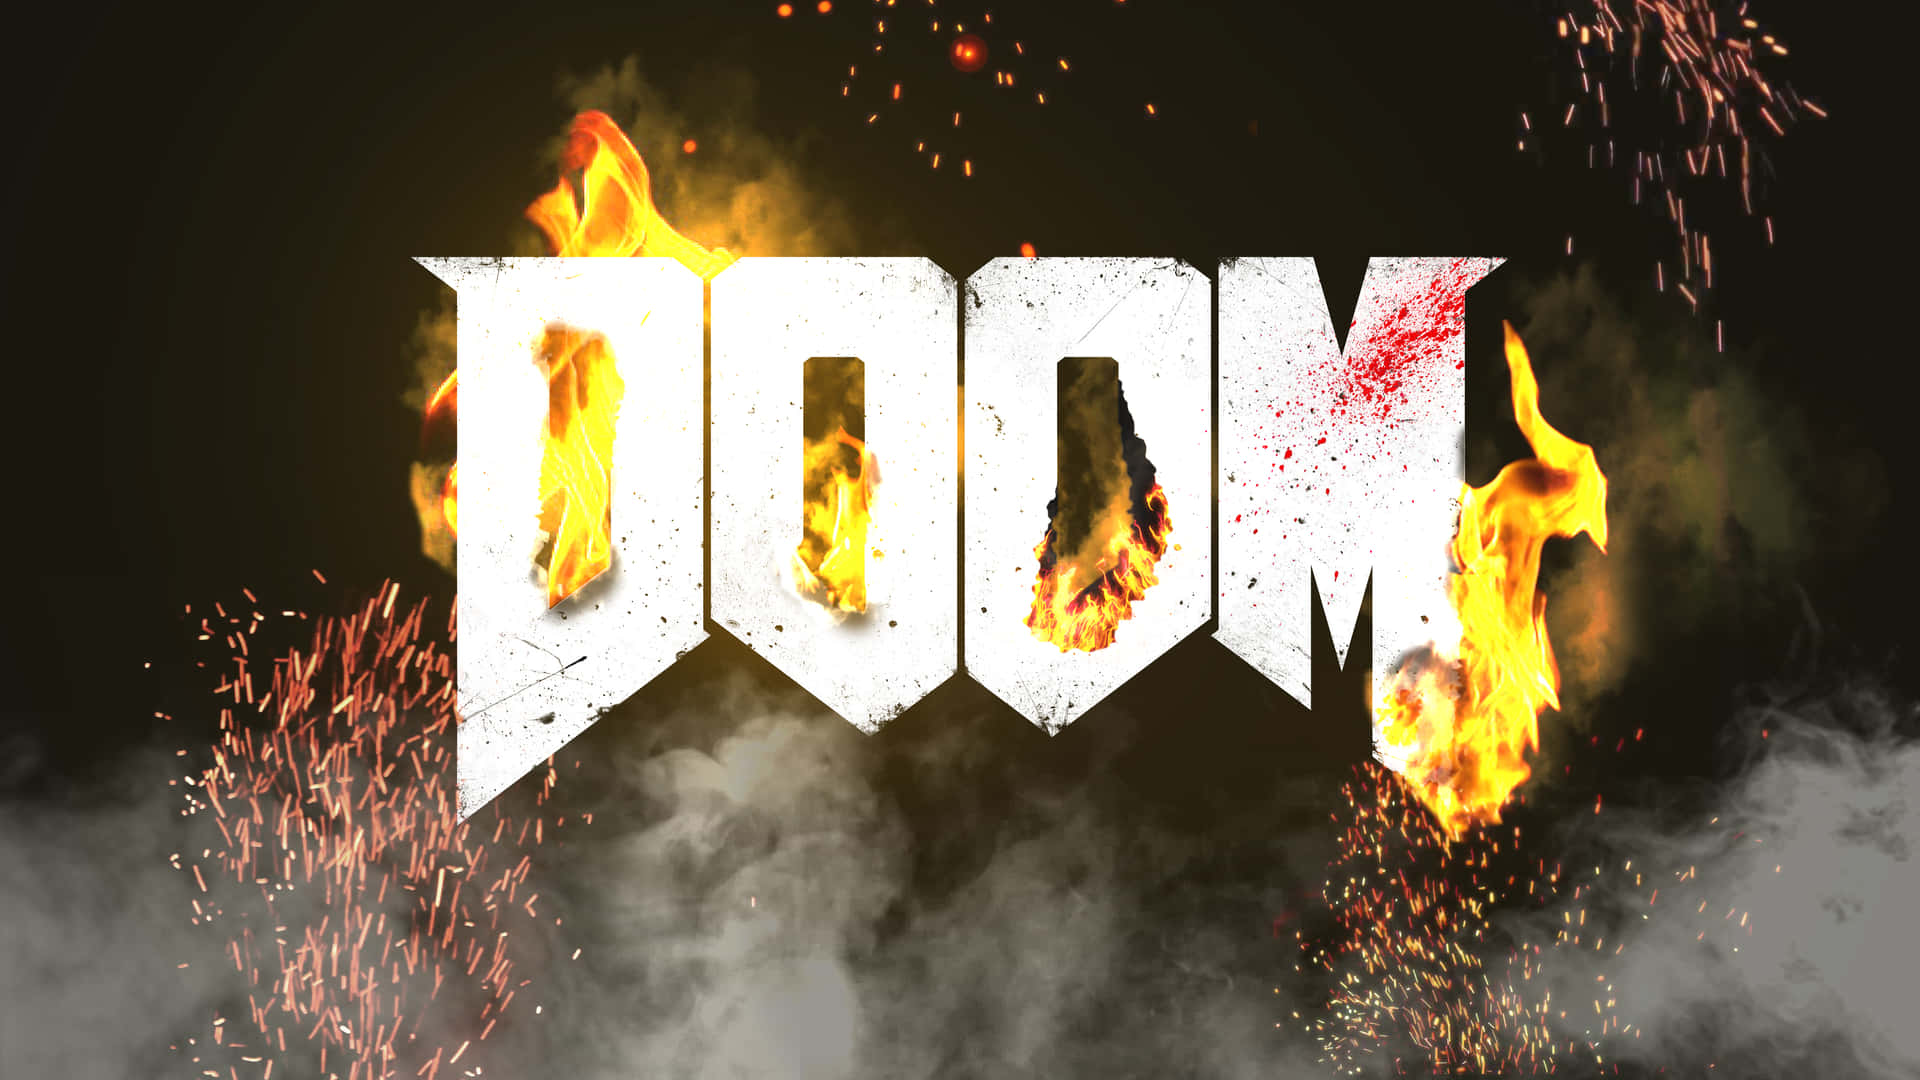 Doom demon battles 2017: Stand and fight Wallpaper